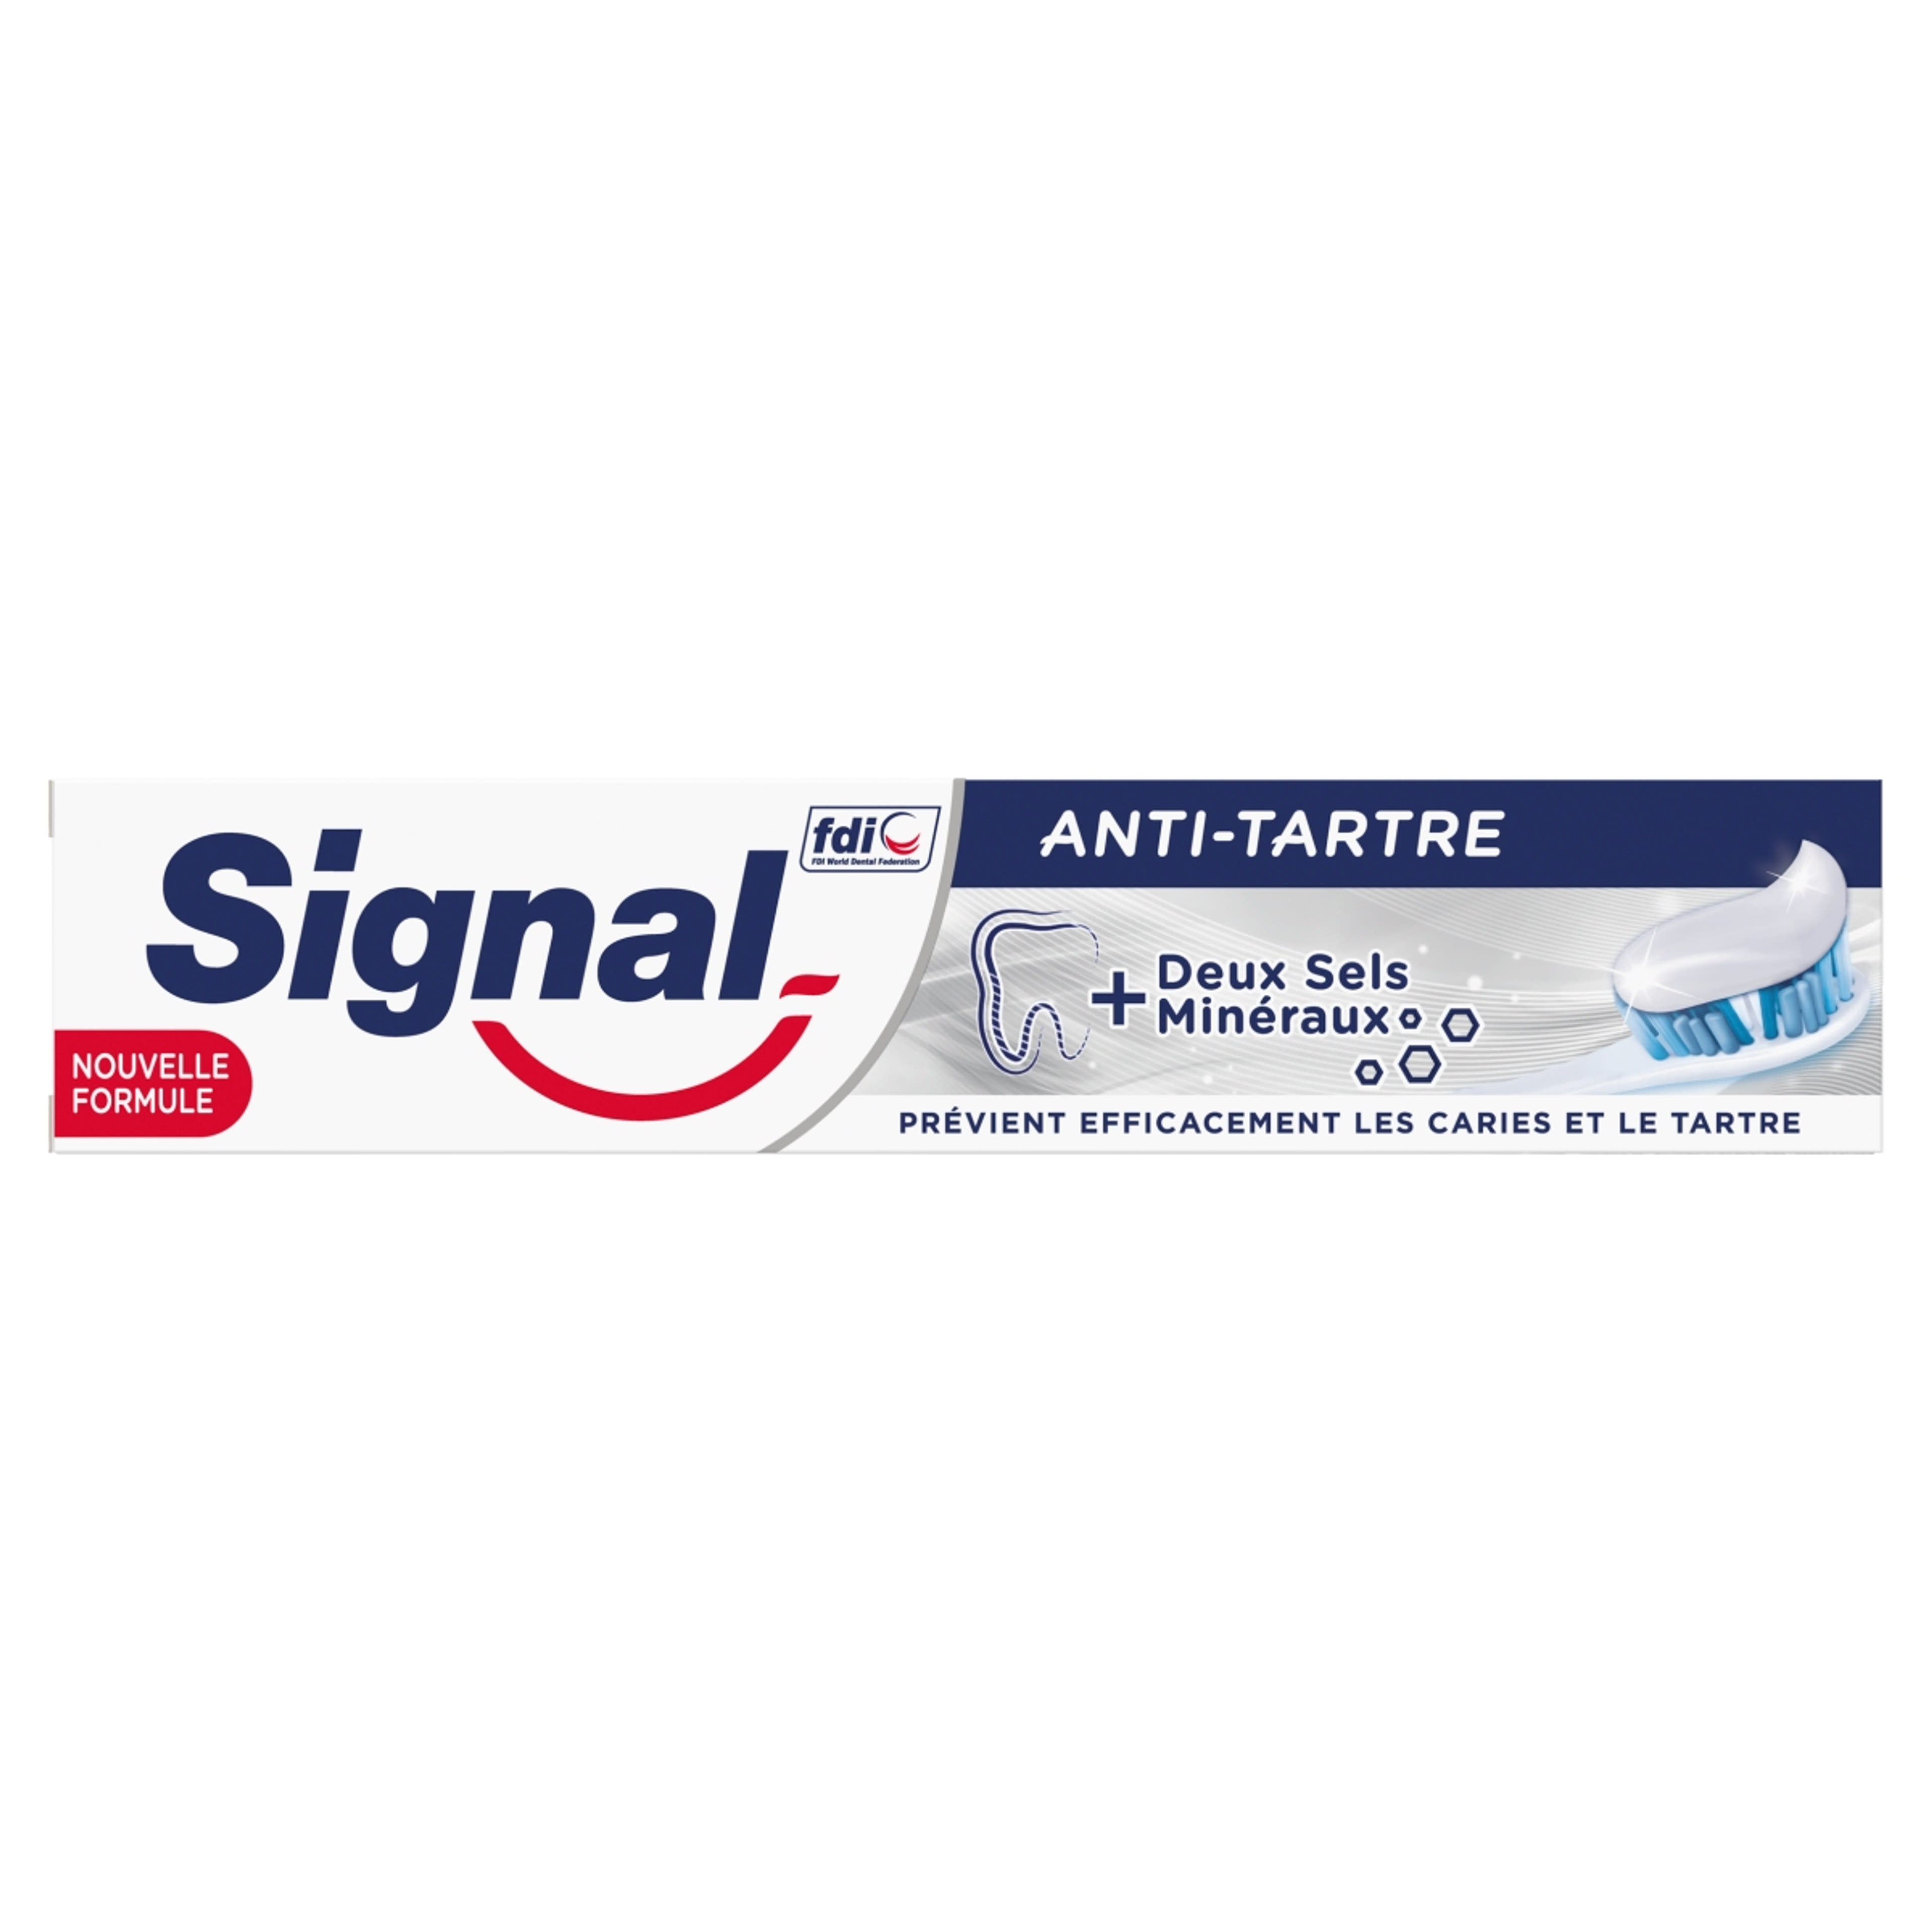 Signal Family Anti-Tartar fogkrém - 75 ml